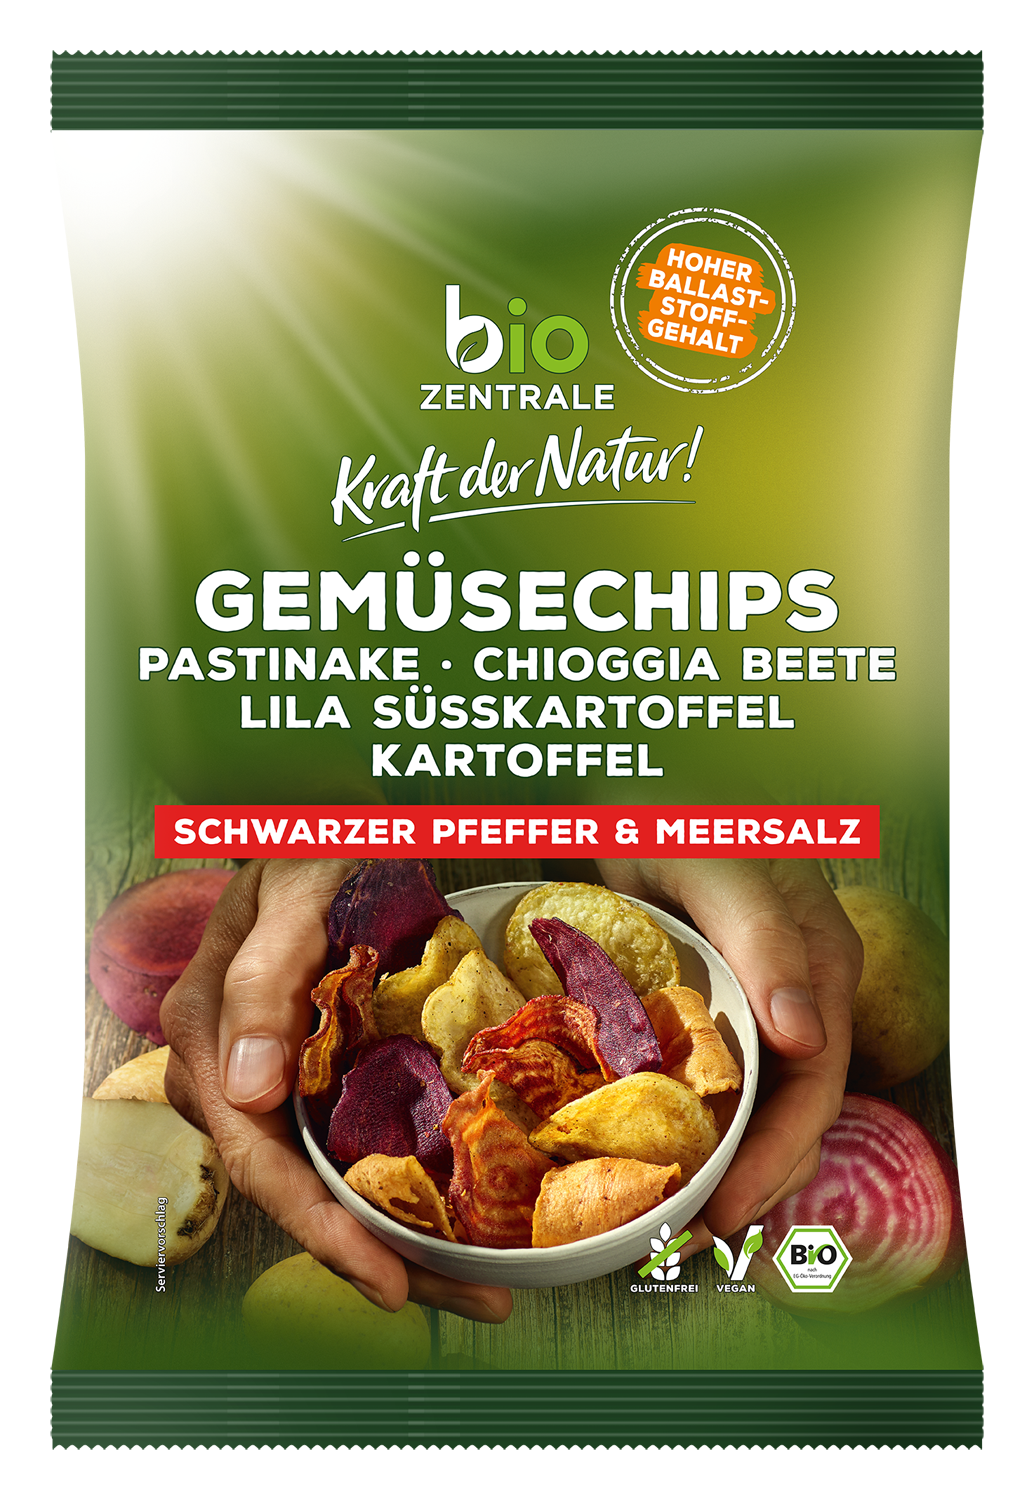 Gemüsechips Schwarzer Pfeffer & Meersalz